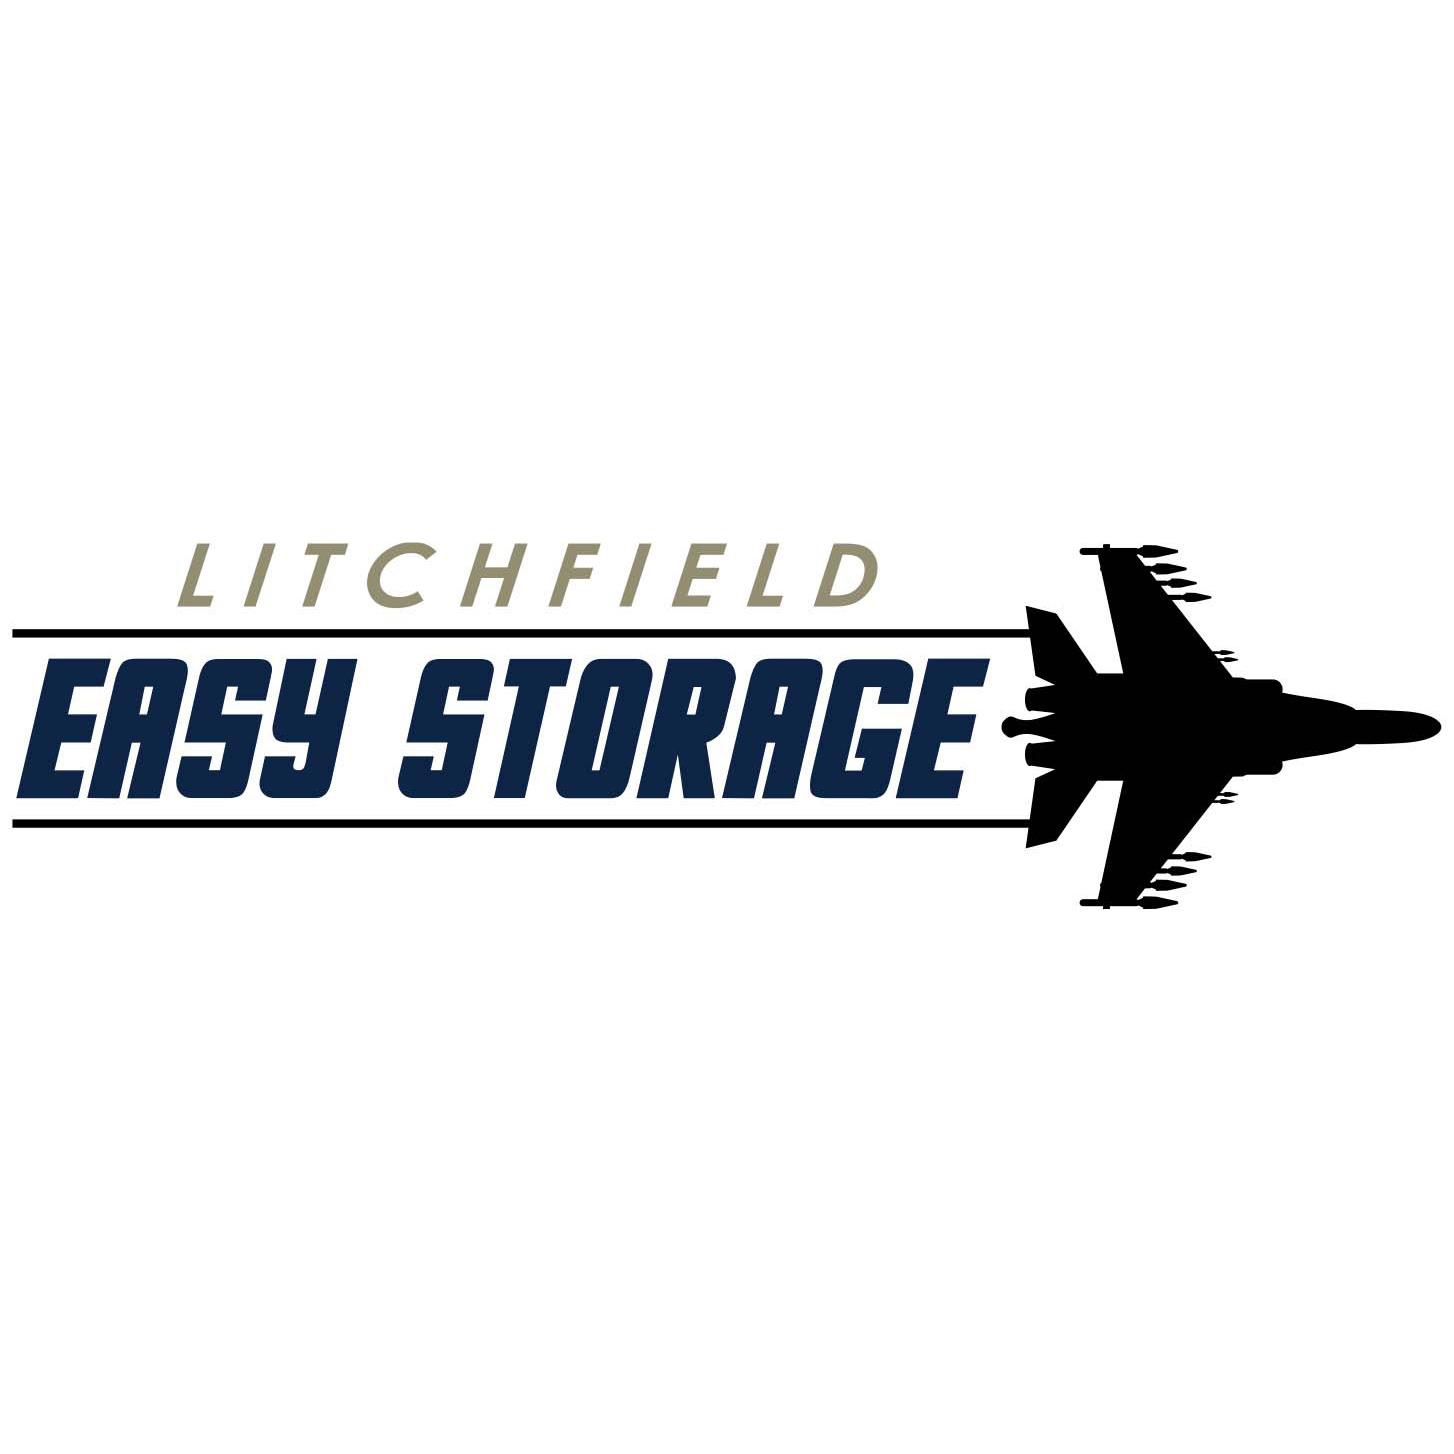 Litchfield Easy Storage - Glendale, AZ 85340 - (623)233-2300 | ShowMeLocal.com